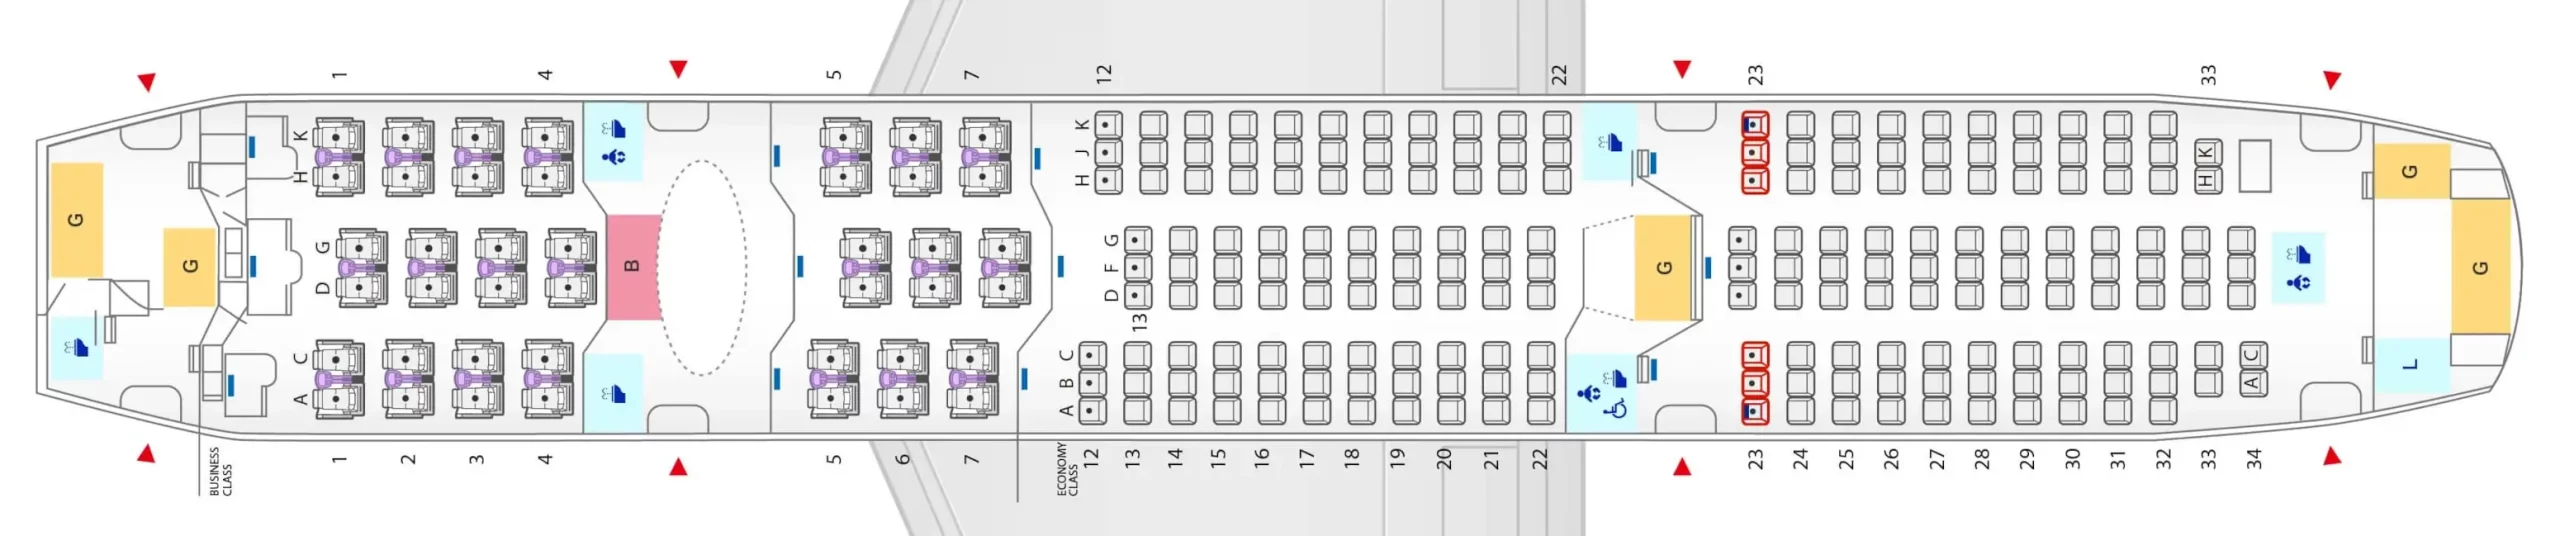 Boeing 787-8 Seat Map